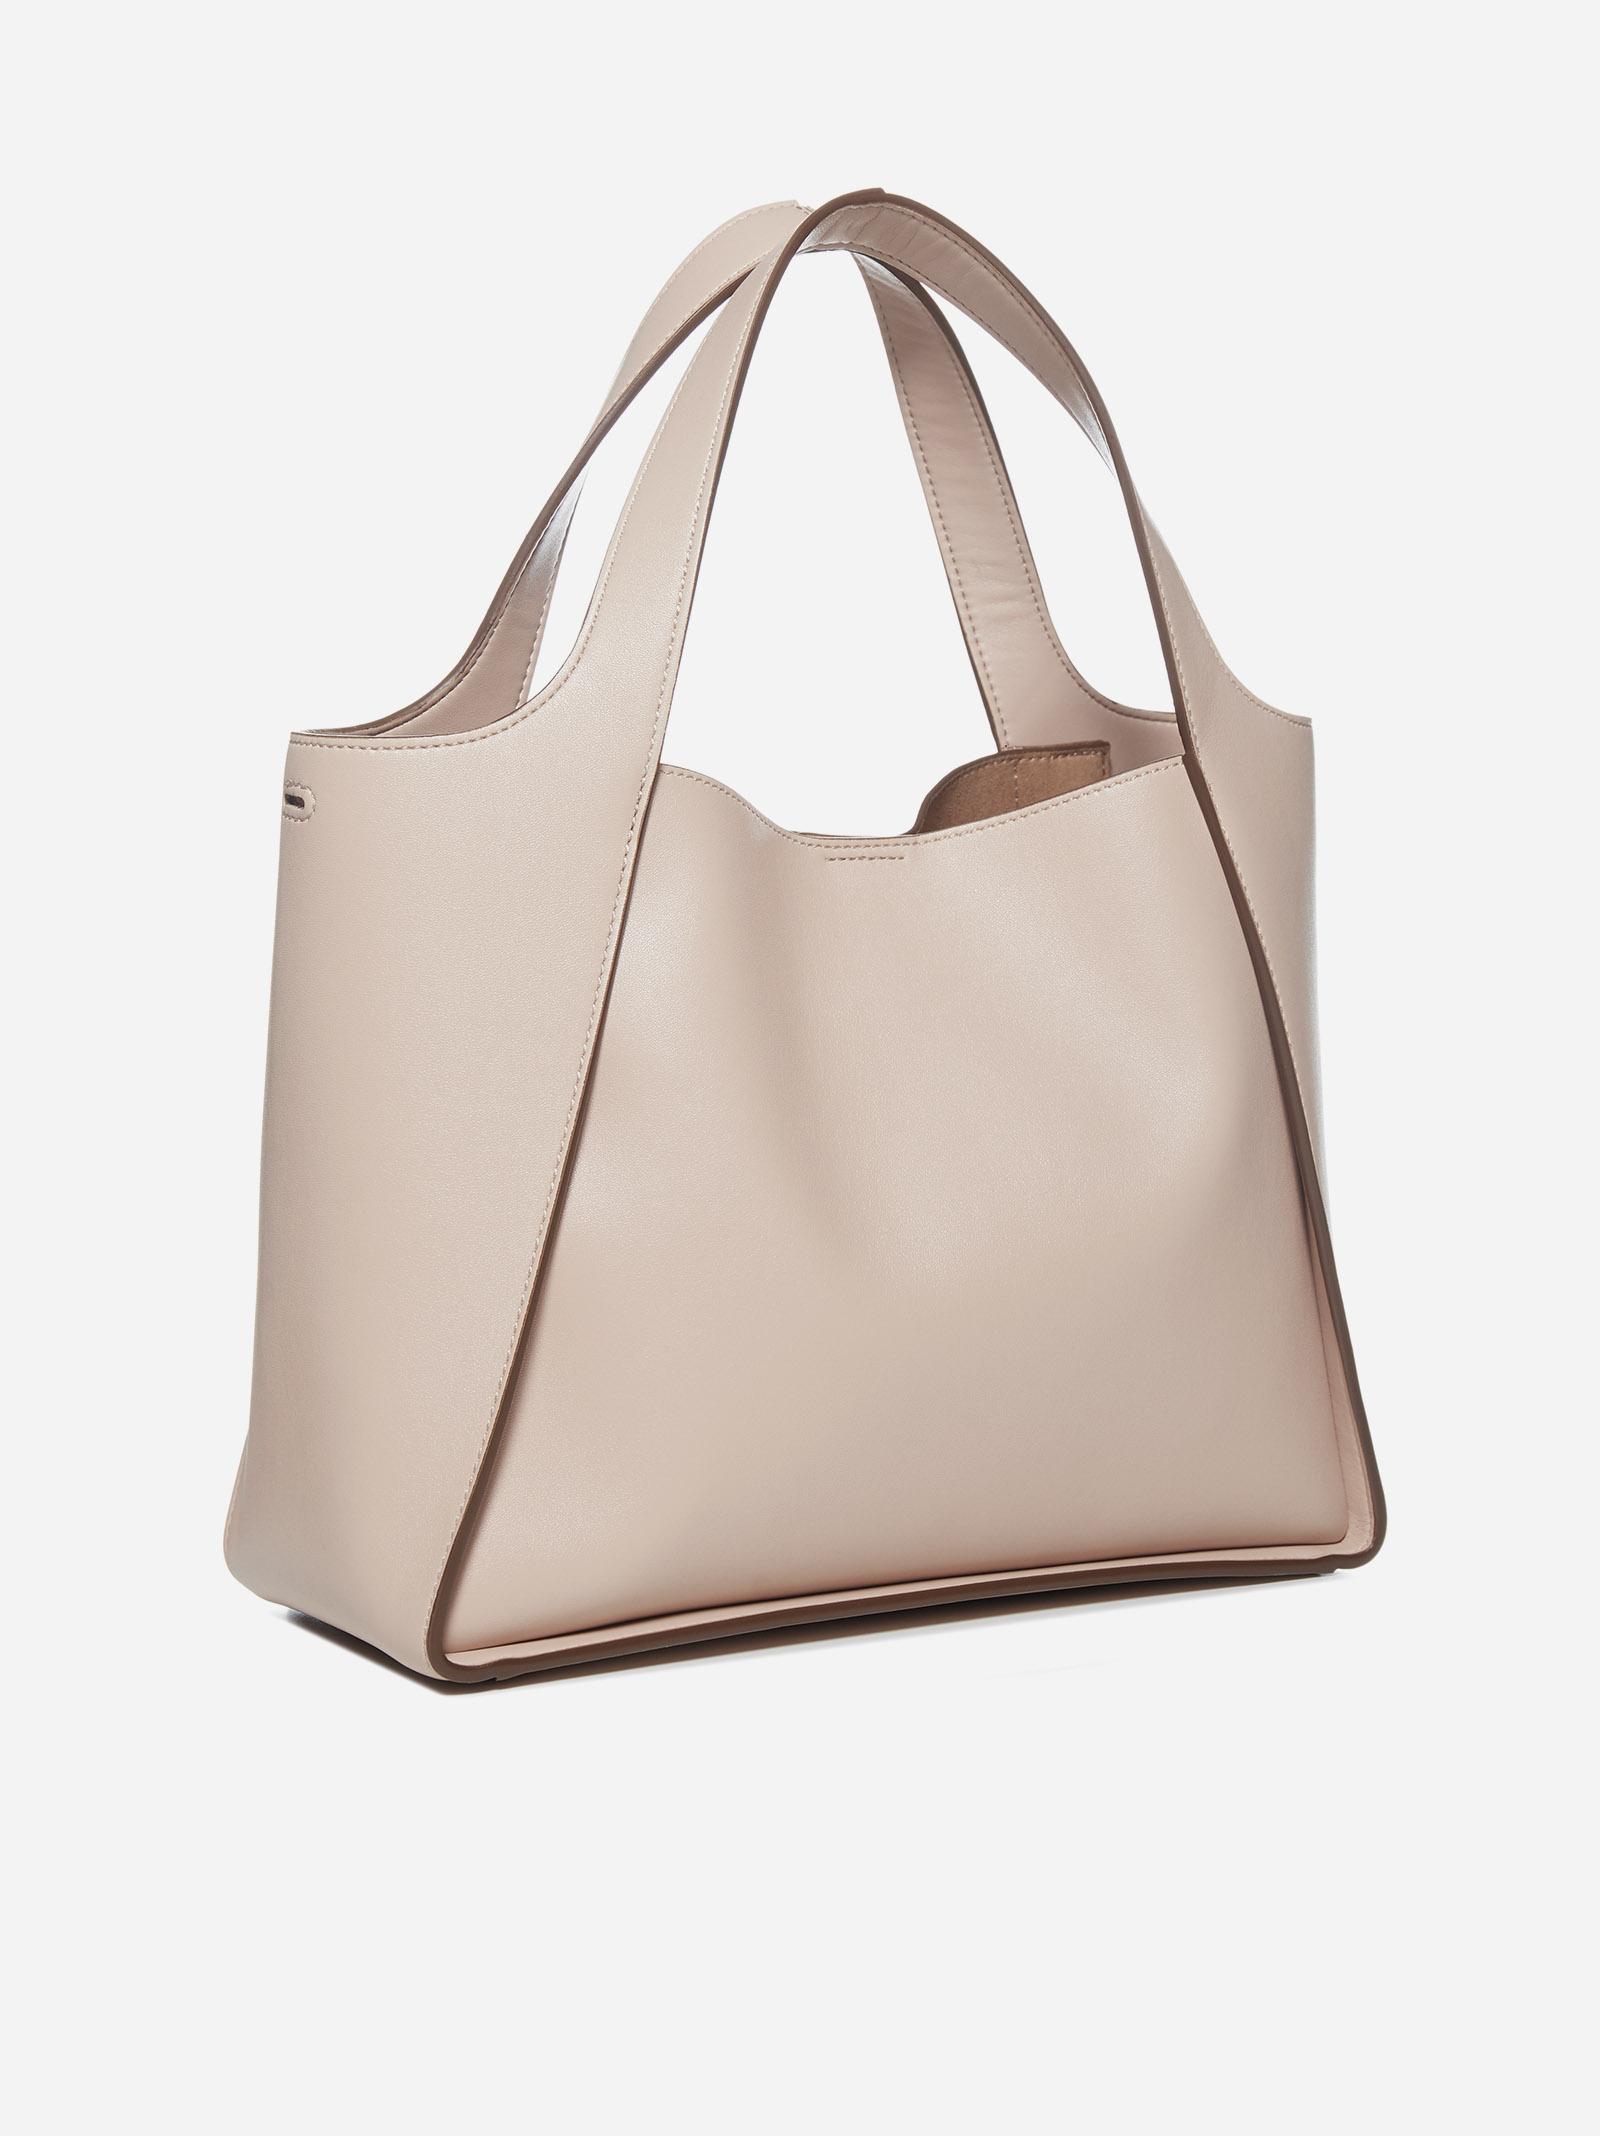 Stella McCartney Logo Vegan Leather Bag in Natural | Lyst